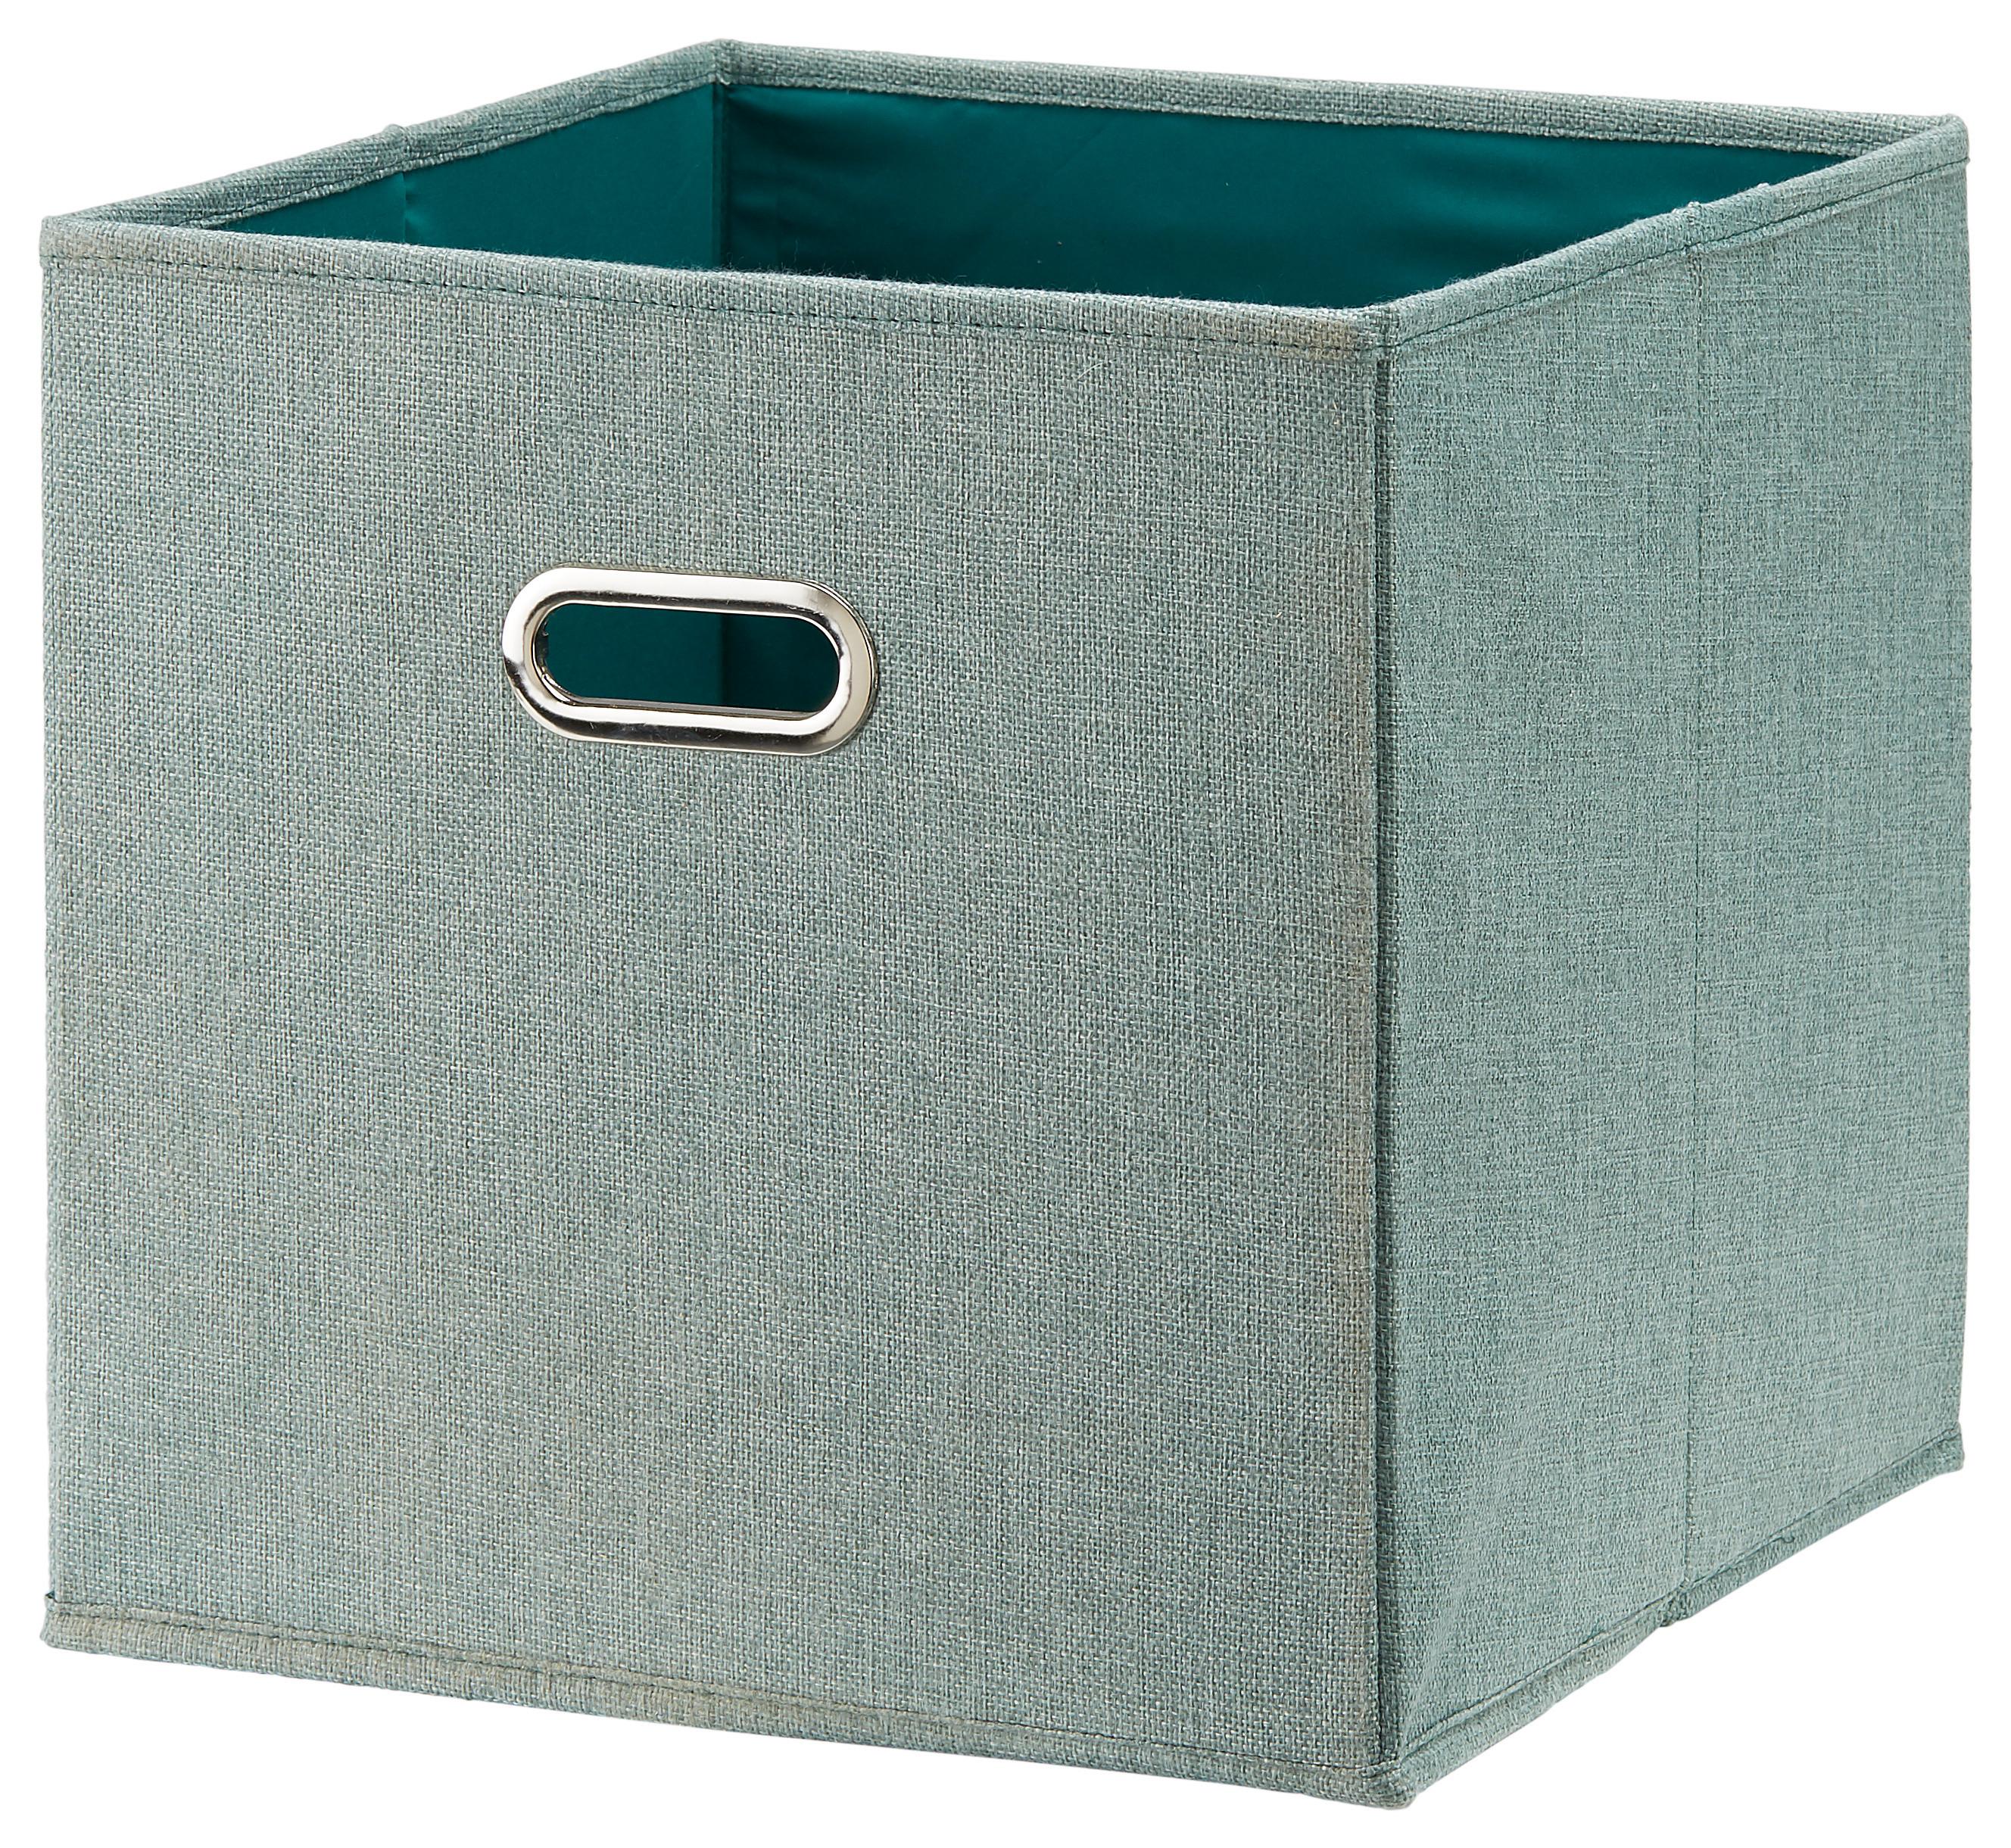 Faltbox Bobby ca. 34l - Grün, Modern, Karton/Textil (33/32/33cm) - Premium Living